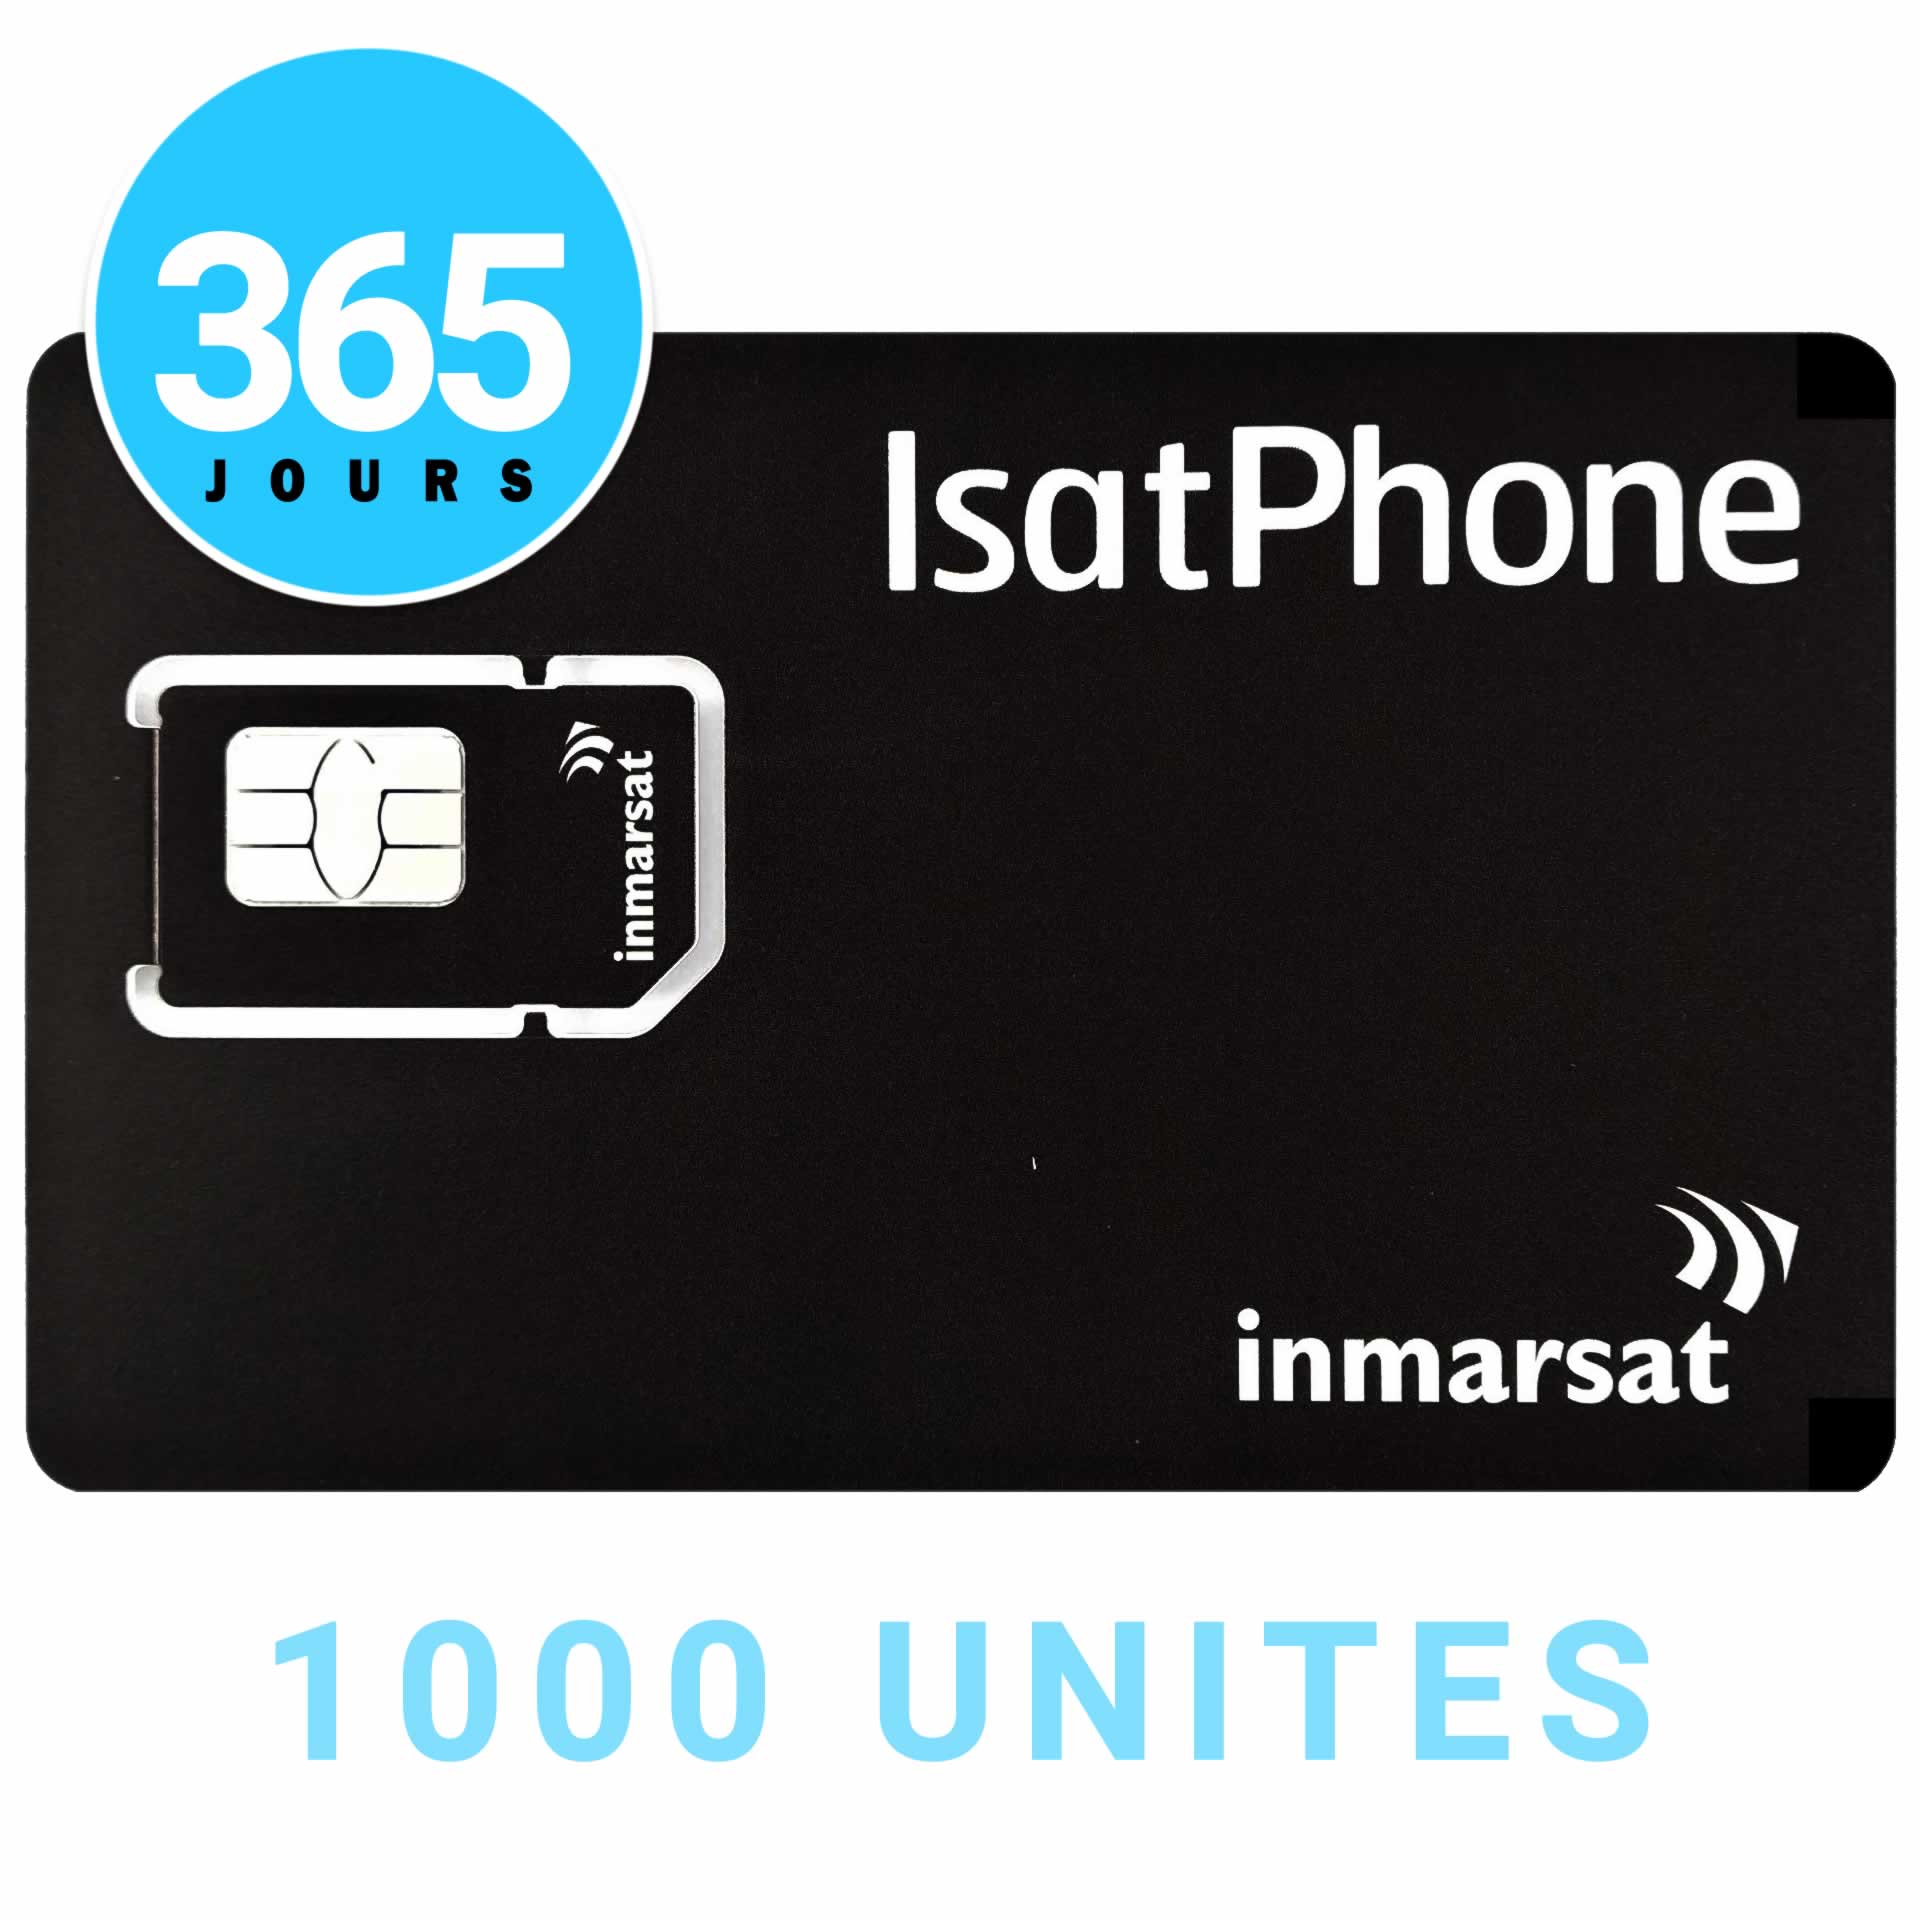 INMARSAT Rechargeable ISATPHONE Prepaid Card - 1000 UNITS - 365 DAYS